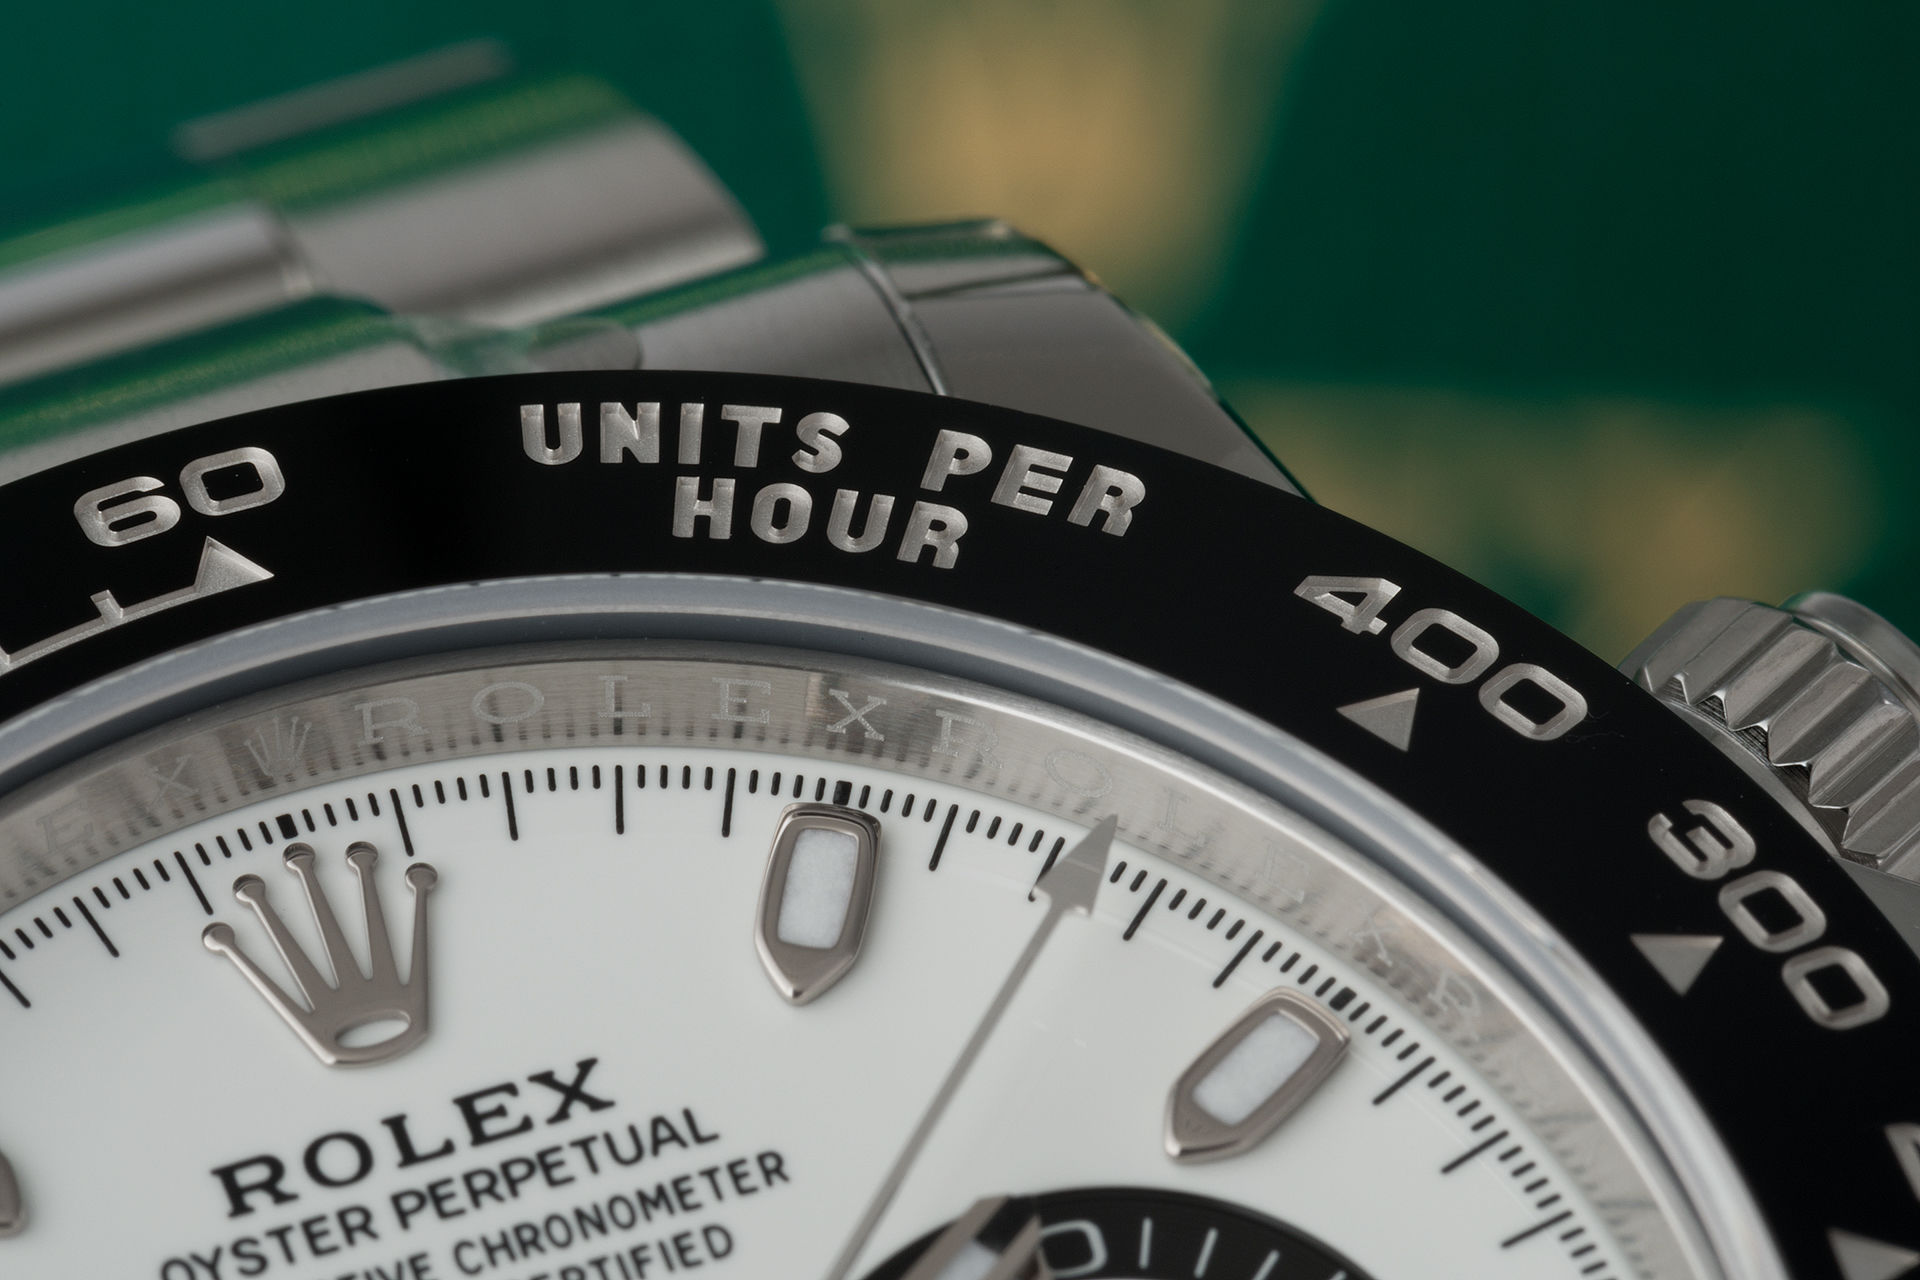 ref 116500LN | Brand New 'Fully Stickered' | Rolex Cosmograph Daytona